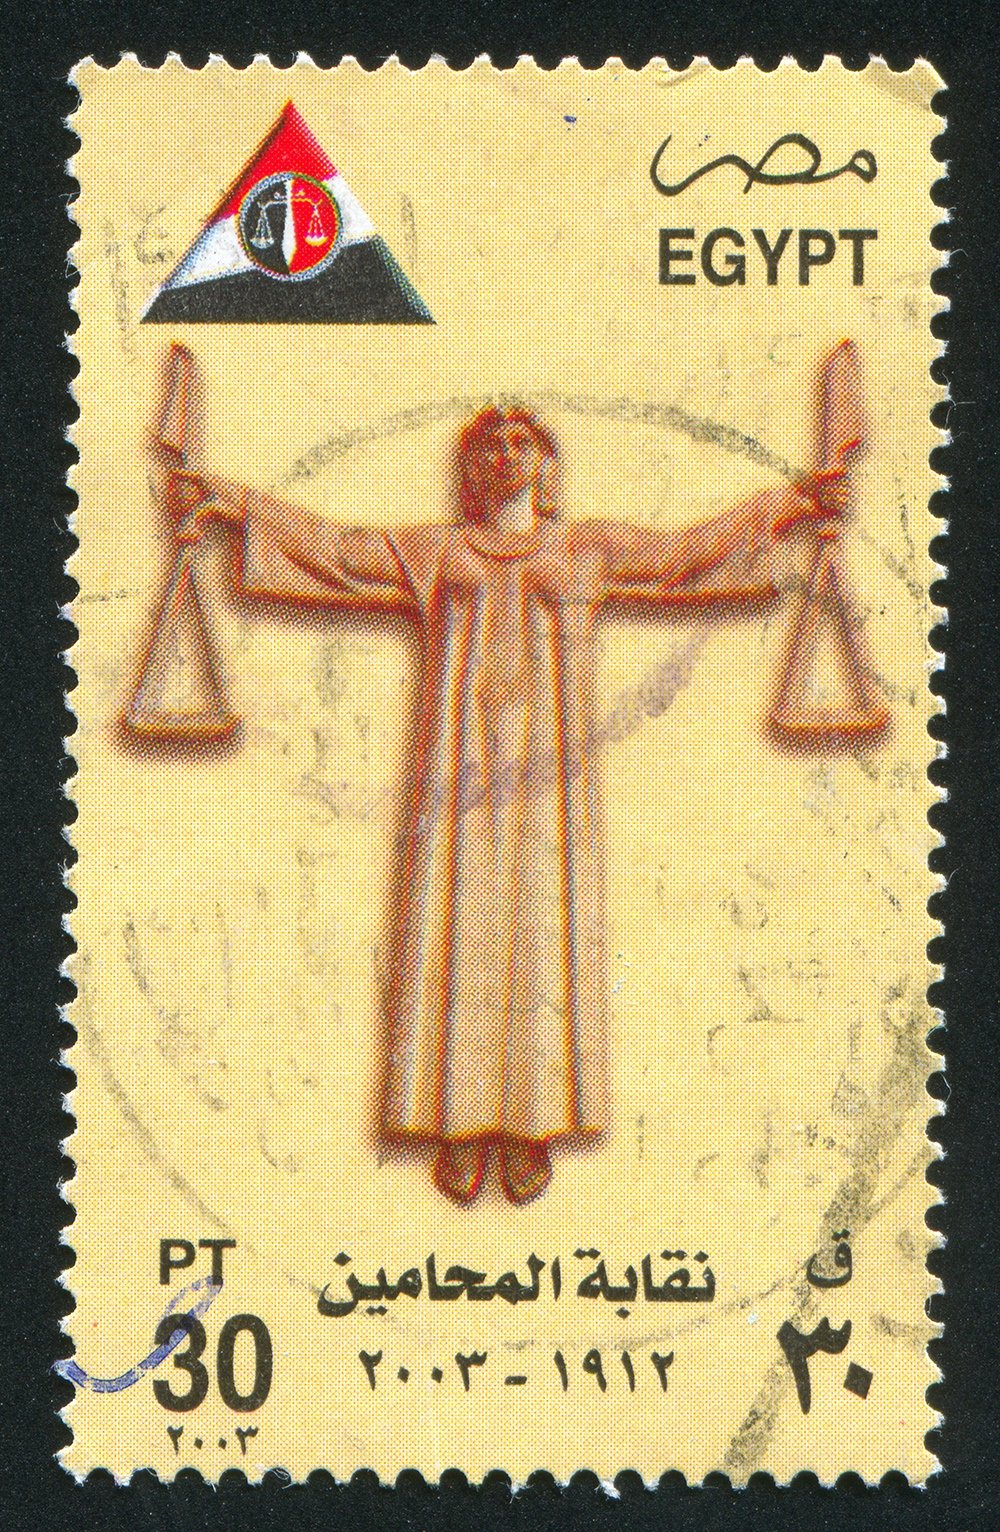 Egypt Circa 2002 Stamp